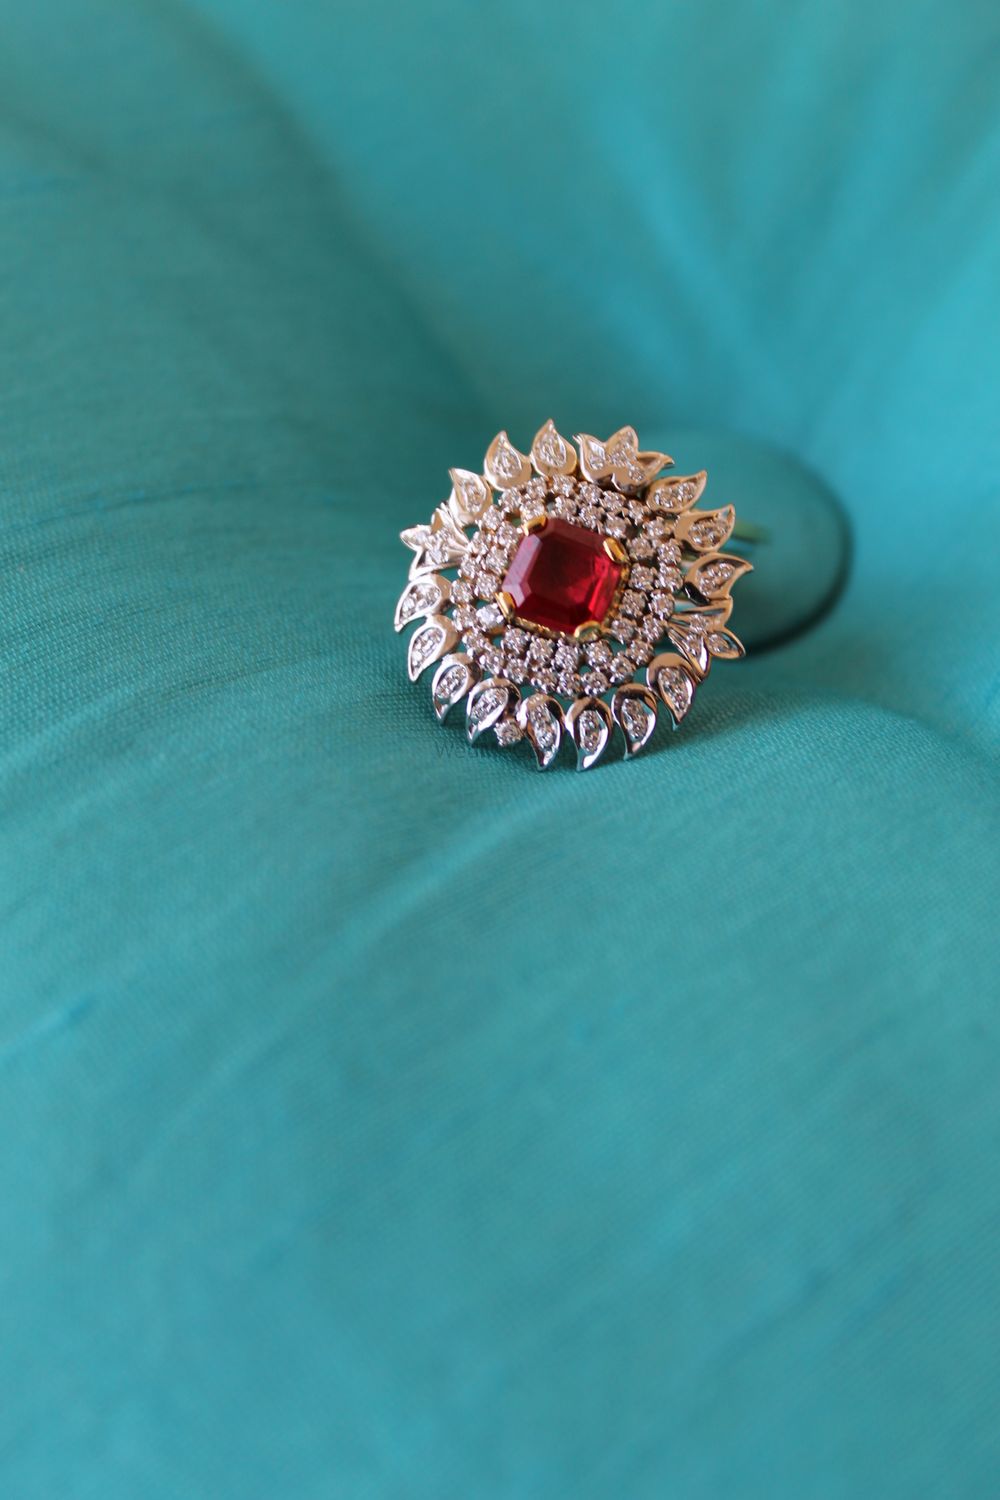 Photo From Fine jewellery - By Sweta Parikh-Bespoke Jewelry